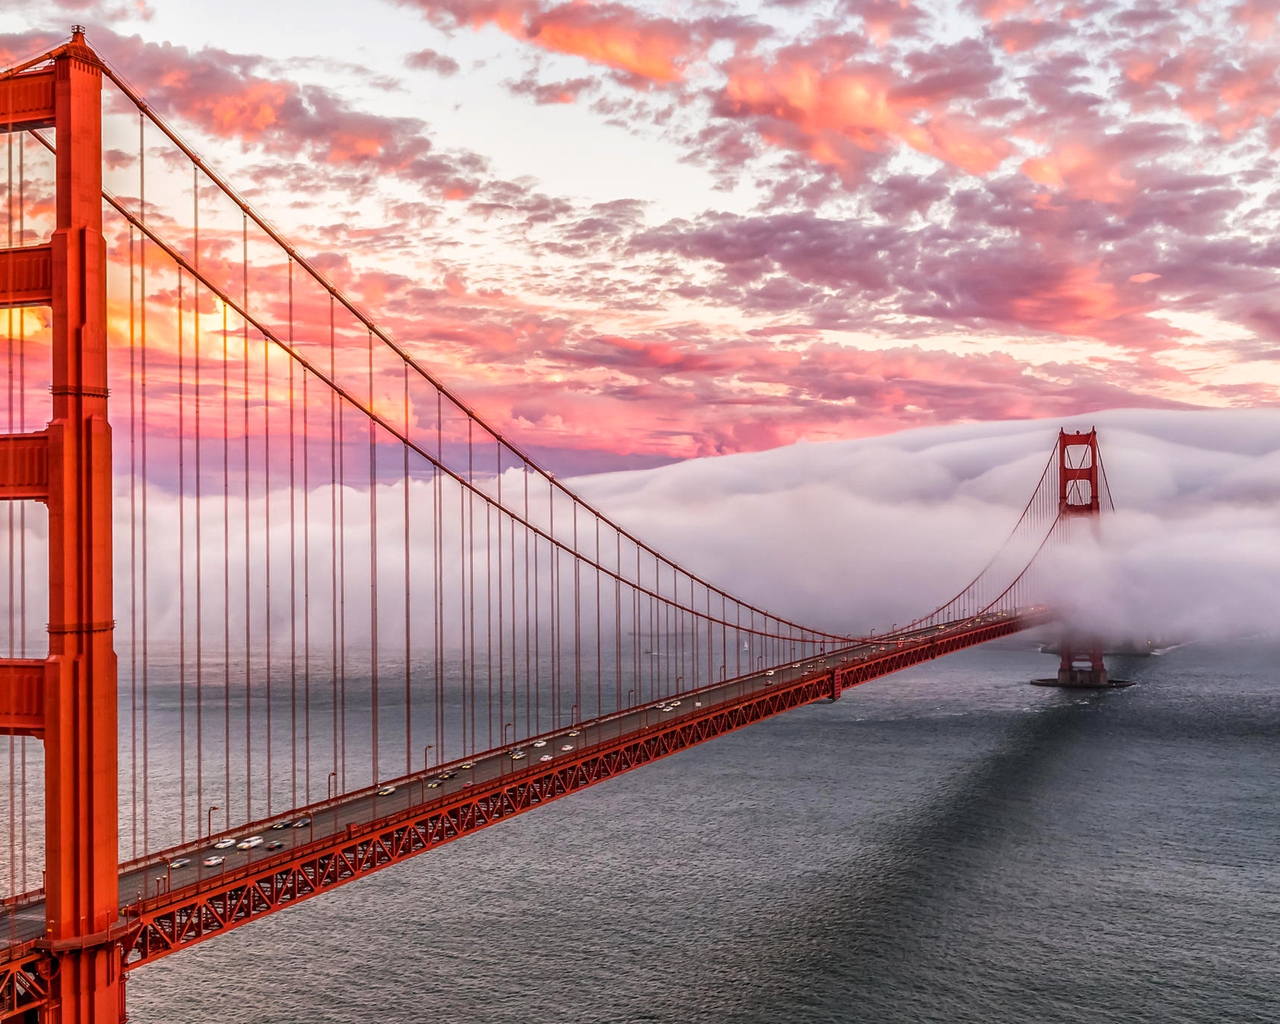 Golden Gate Bridge in San Francisco for 1280 x 1024 resolution